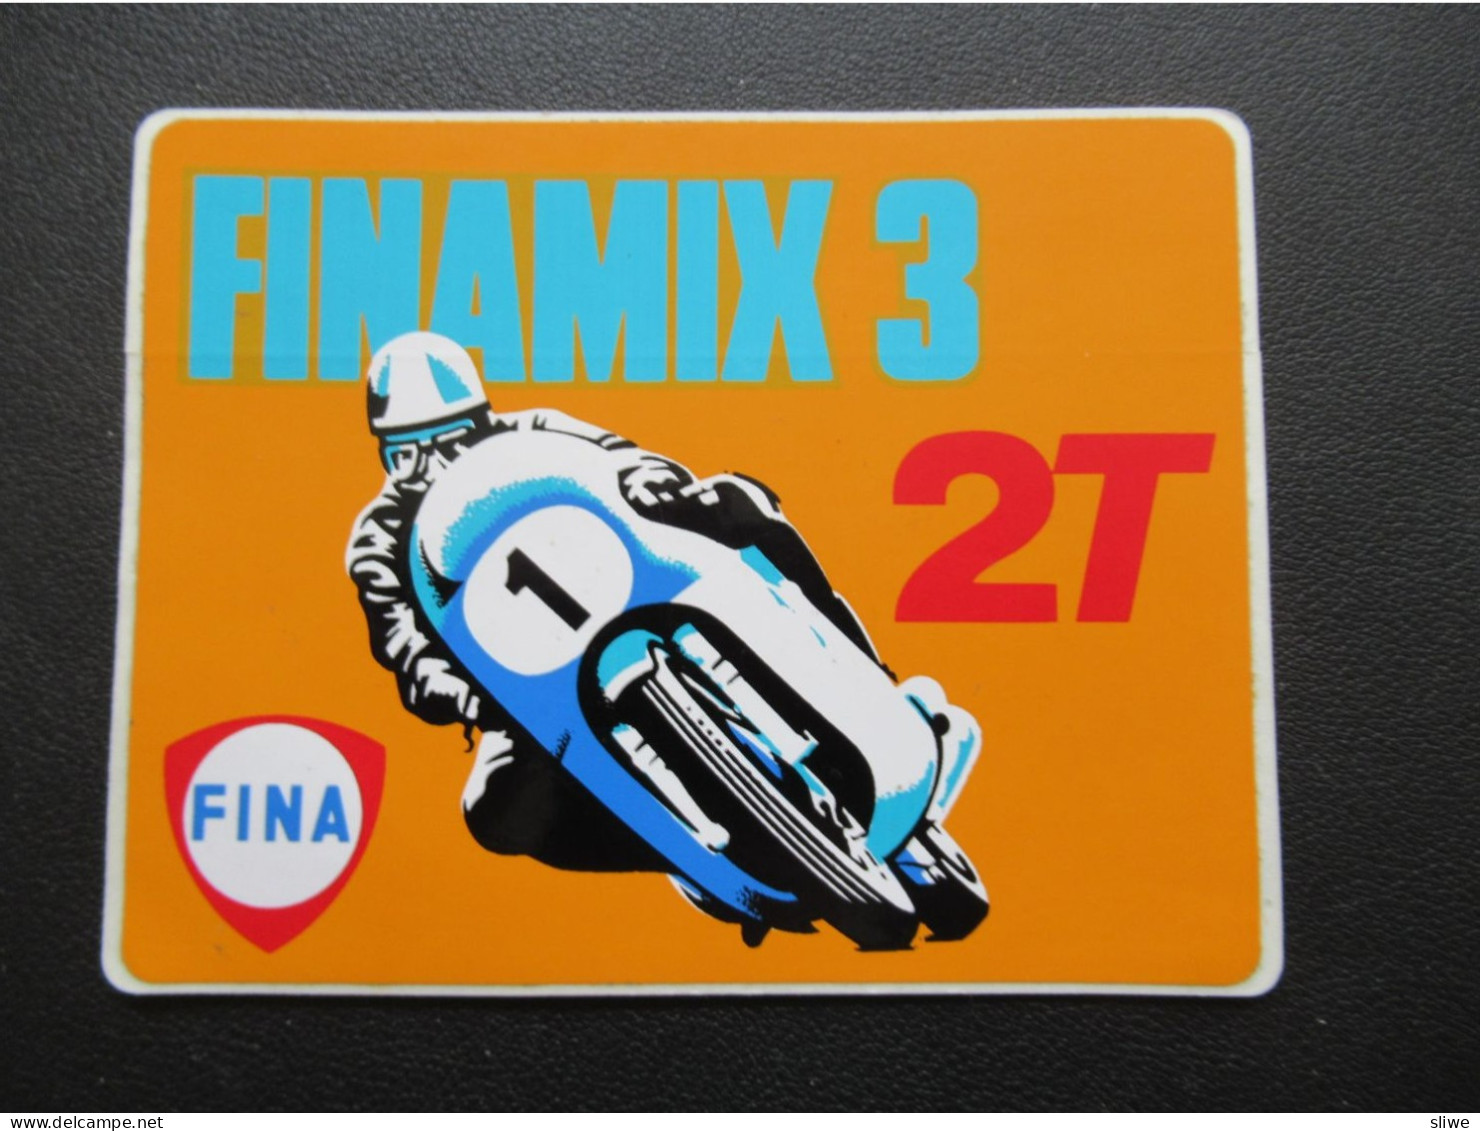 Sticker Finamix 3 - 2T - Pegatinas